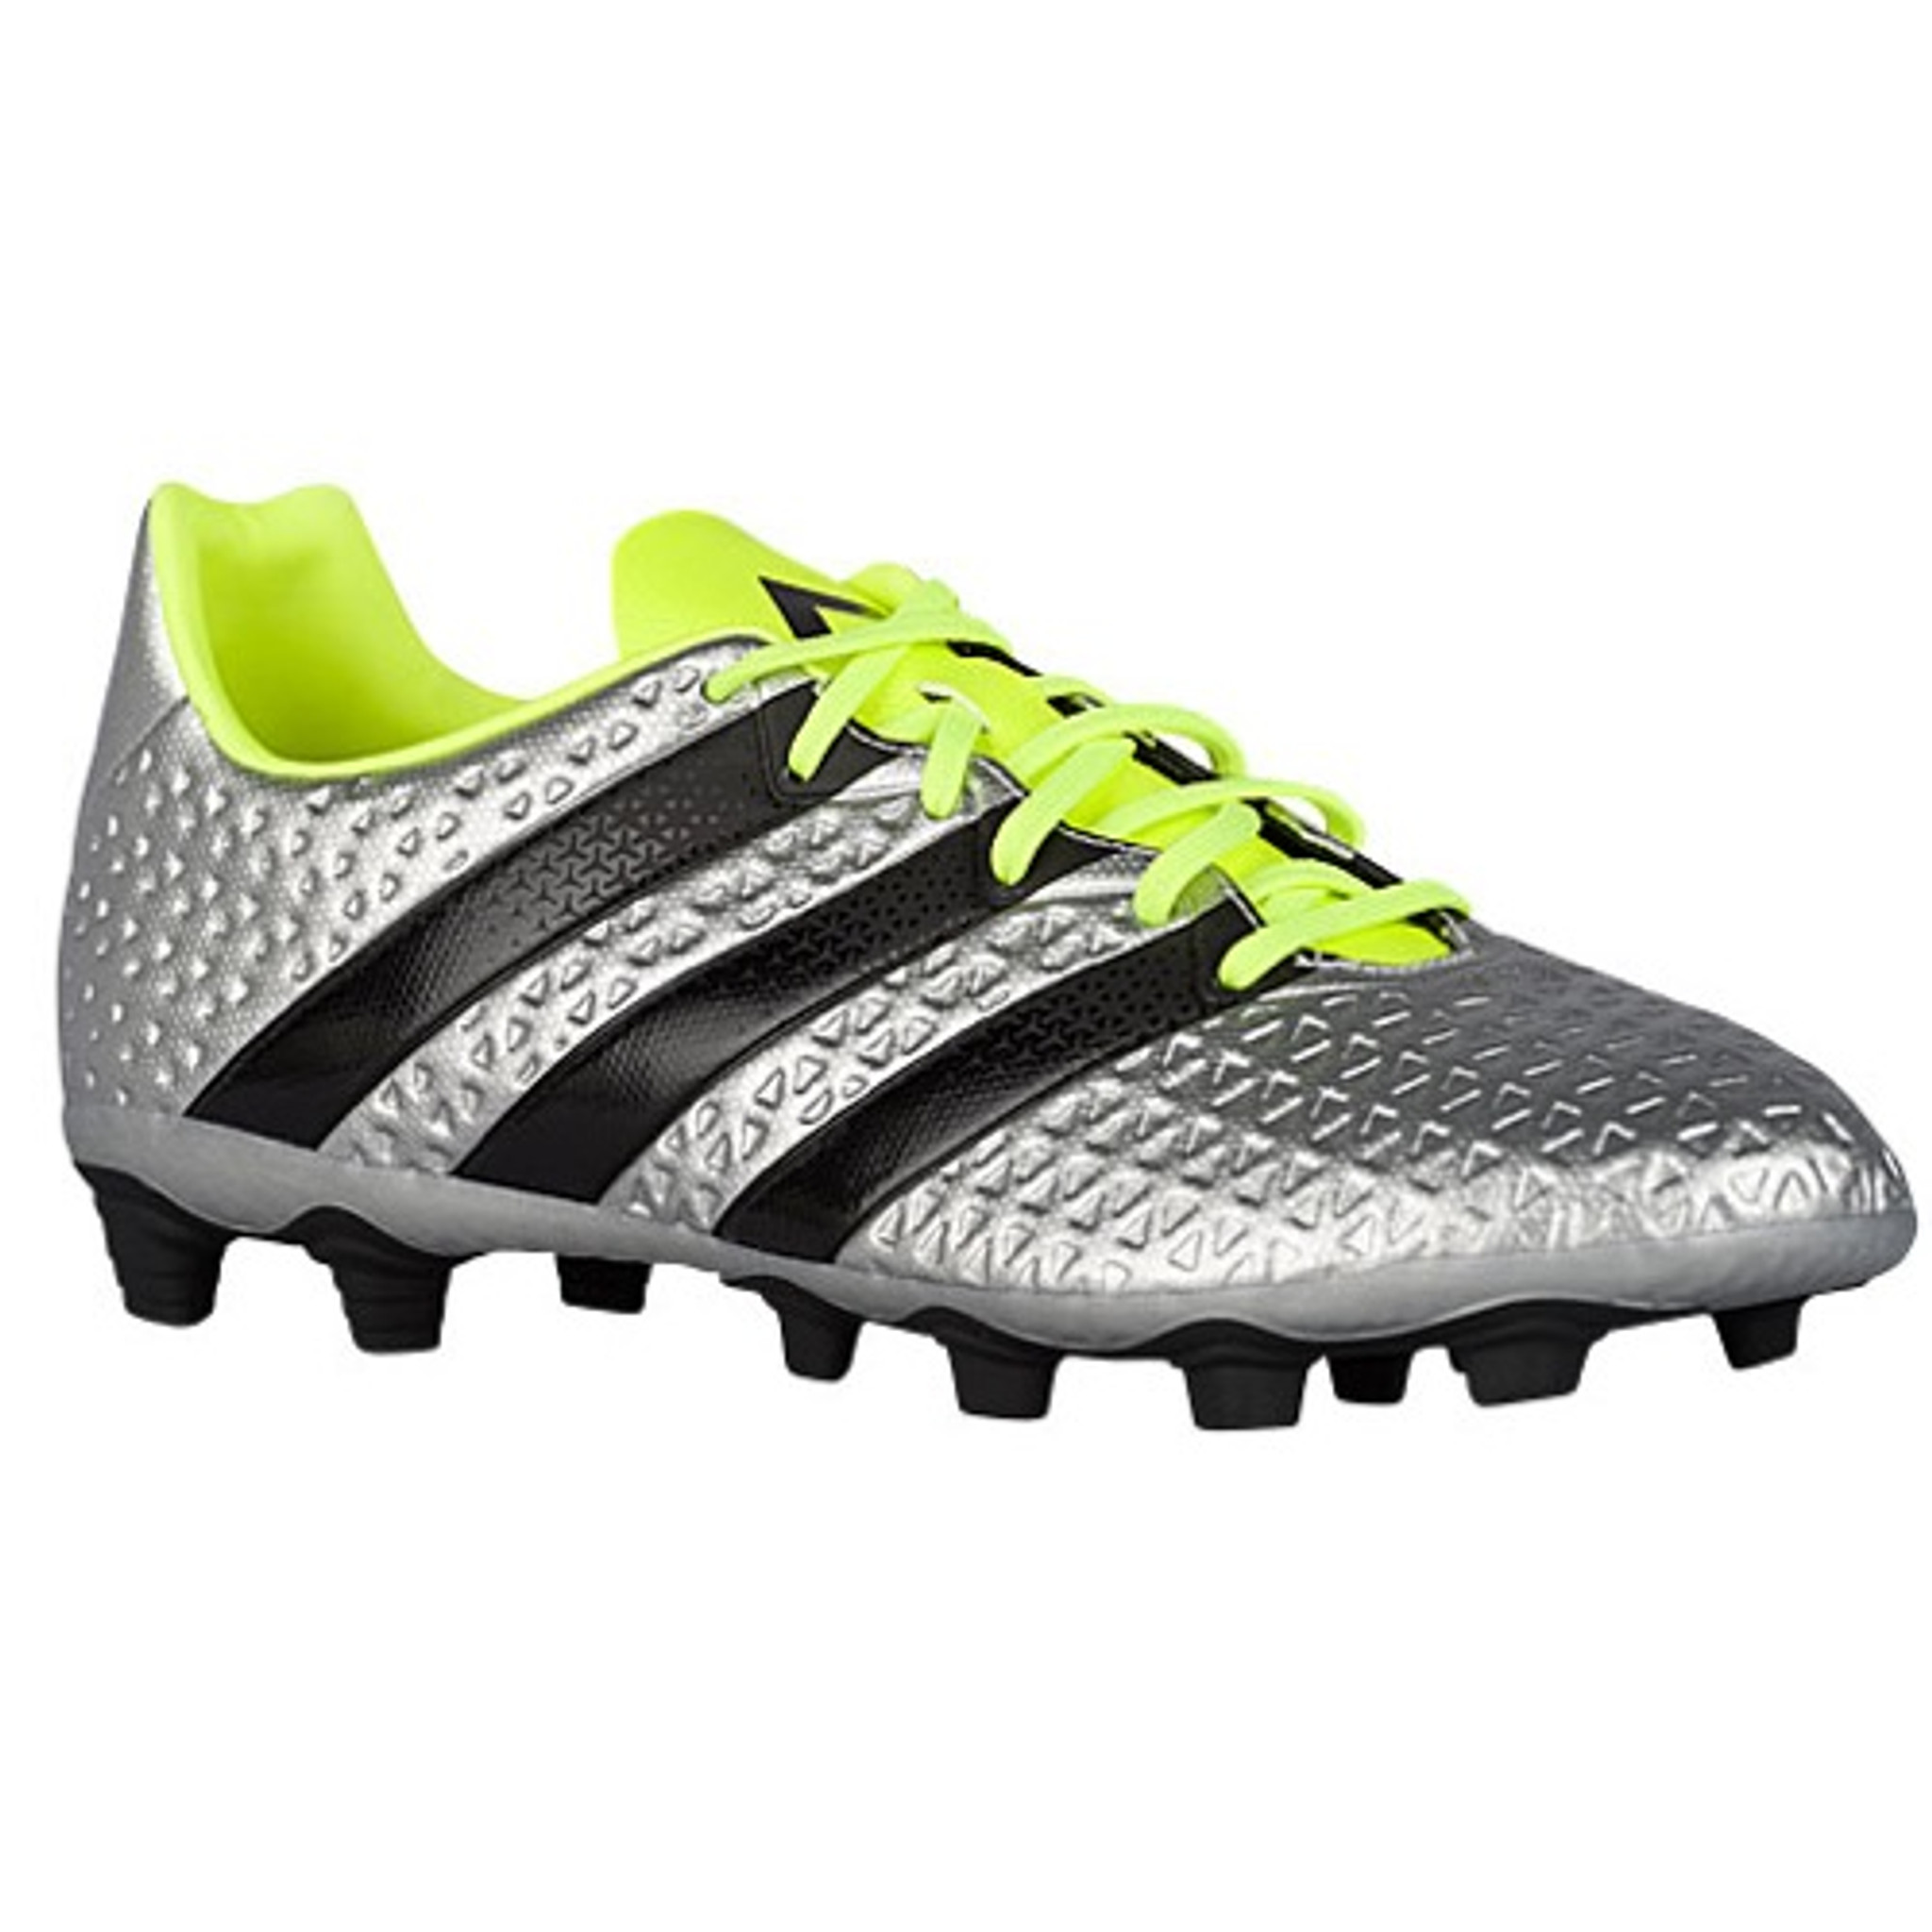 Buy adidas Men's Soccer Shoe Online India | Ubuy